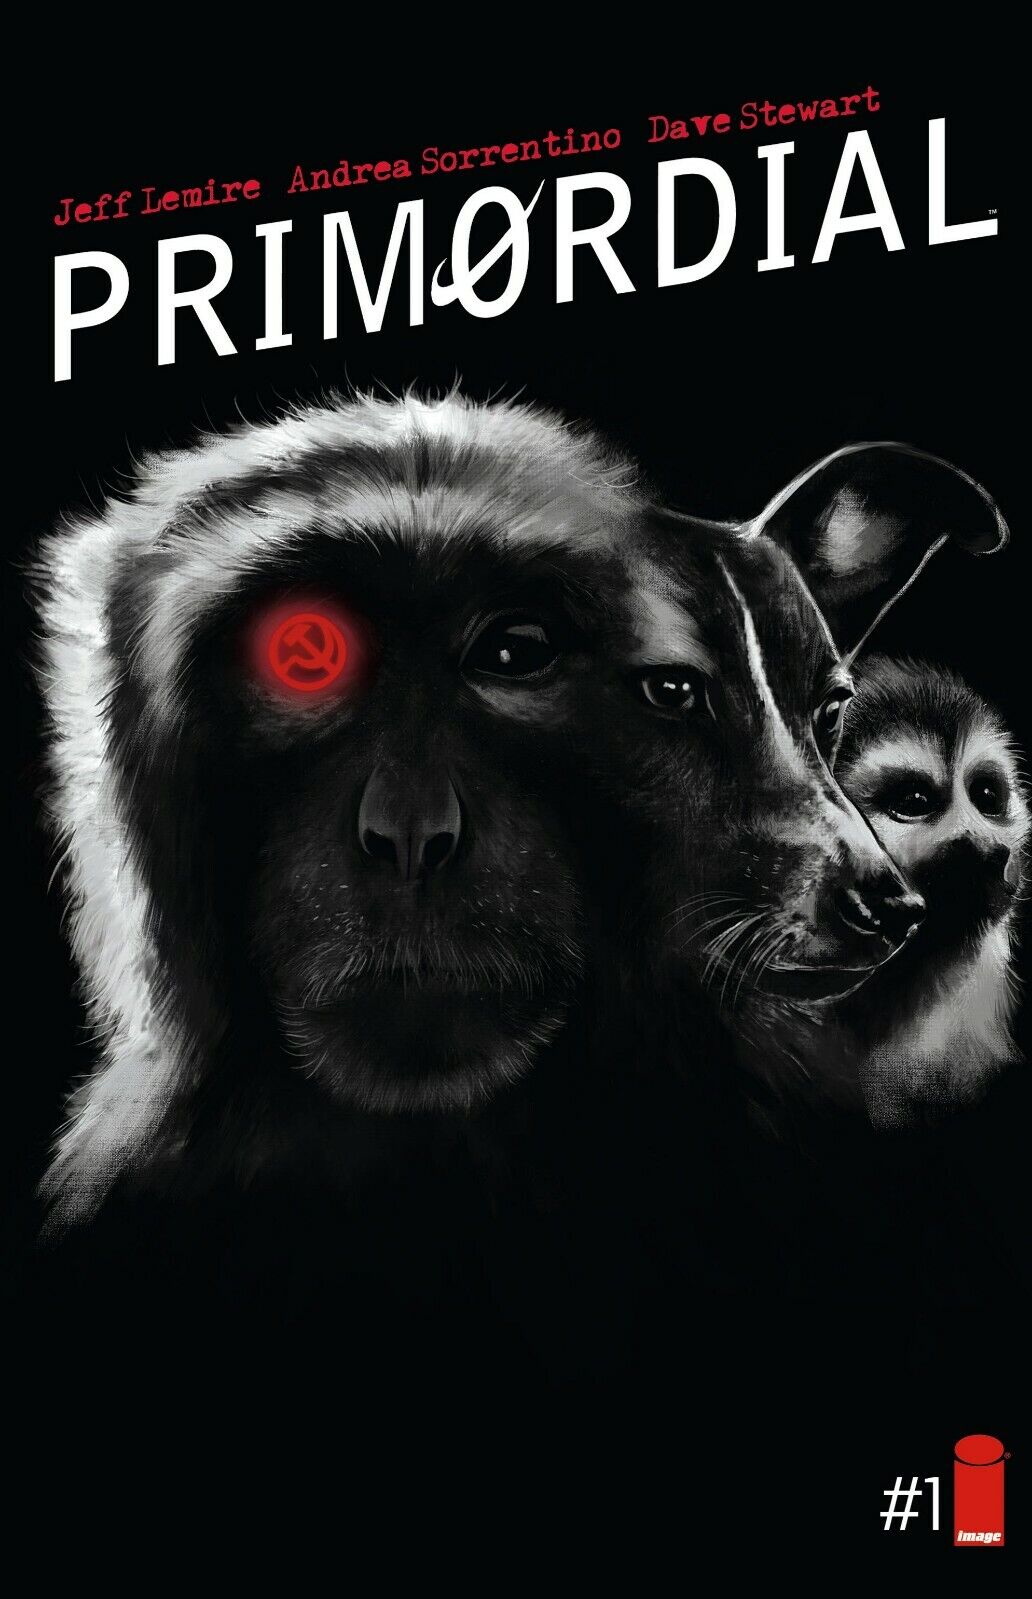 PRIMORDIAL #1 Limited 500 Run. Hammermiester 12 Monkey Homage Warpzone Exclusive